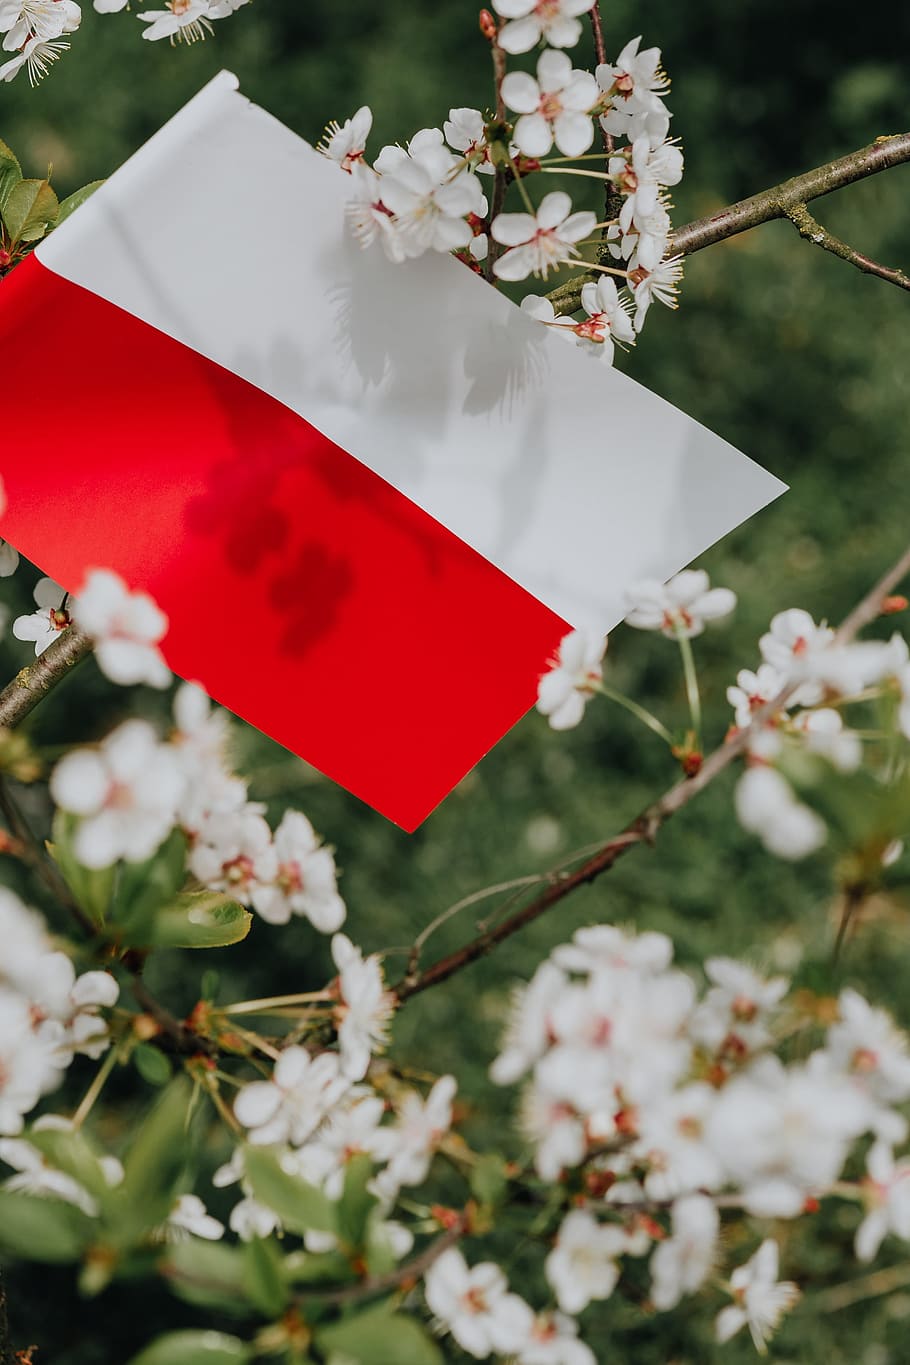 flag, -, polska flaga, nature, Poland, Europe, tree, polish, polska, national